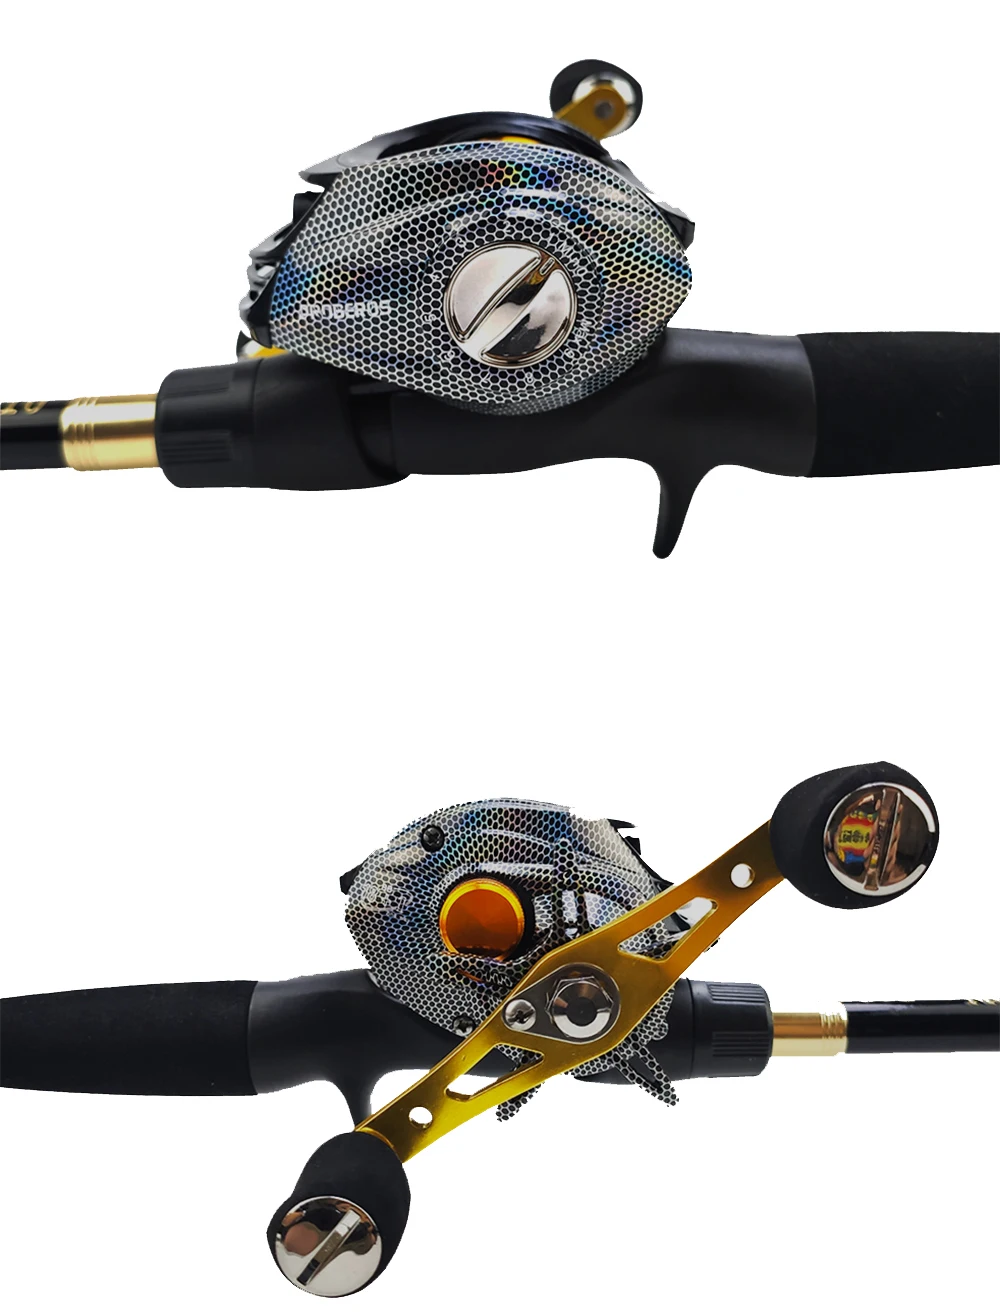 ZURYP 1.8-2.4M casting rod combo Spinning fishing set with bag Portable  Travel fishing combo casting rod reel fishing kit